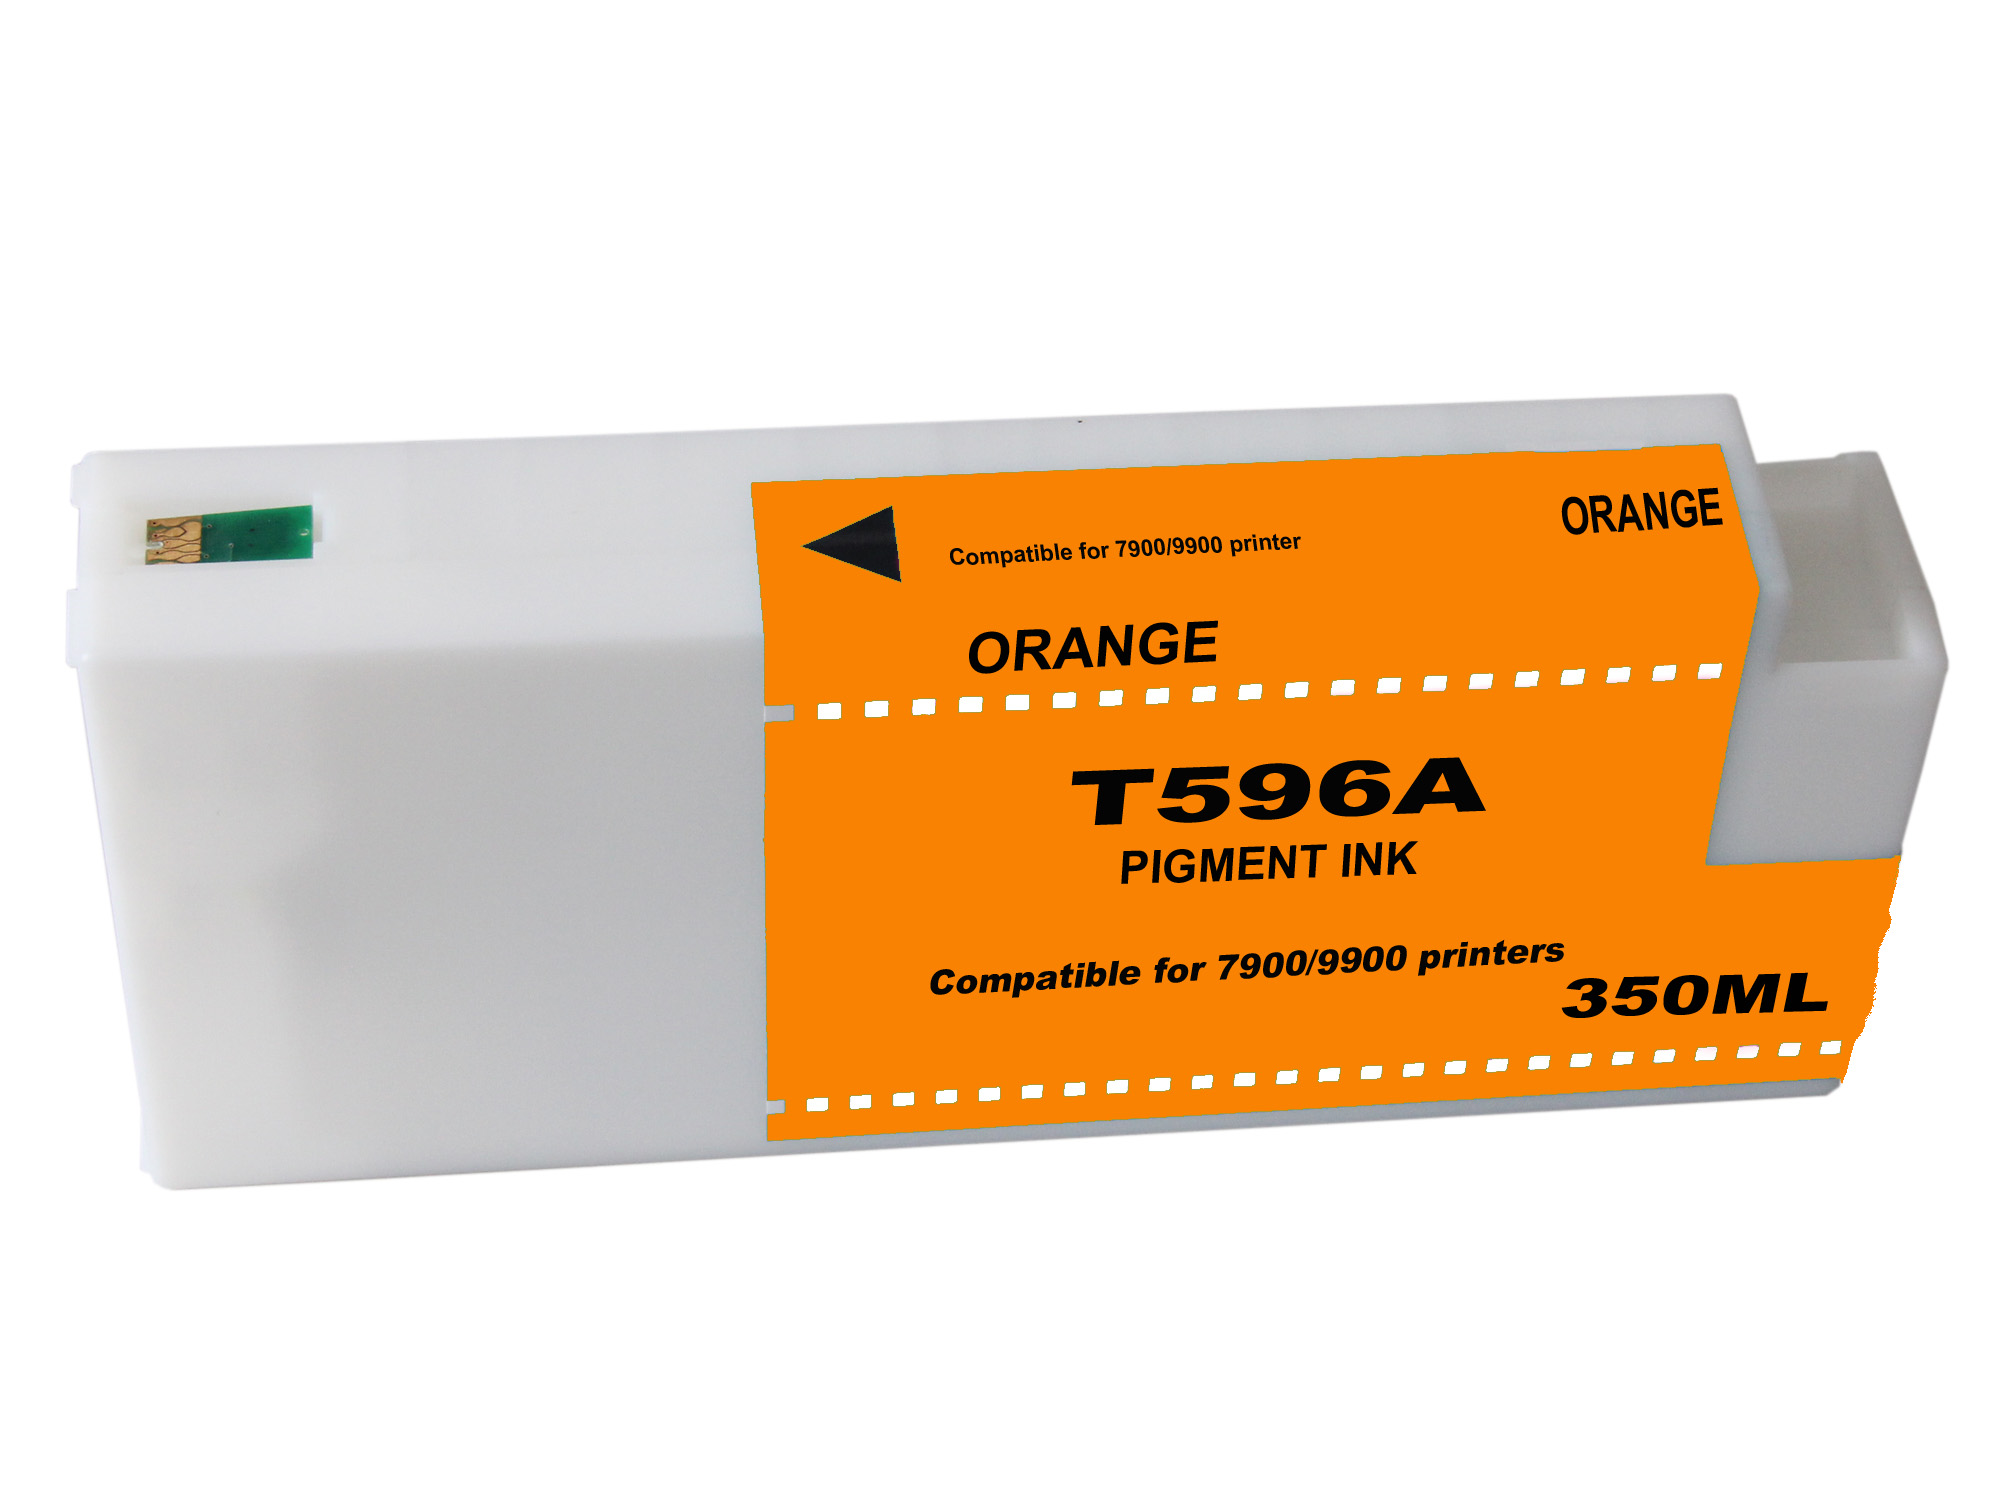 Premium Quality Orange Inkjet Cartridge compatible with Epson T596A00